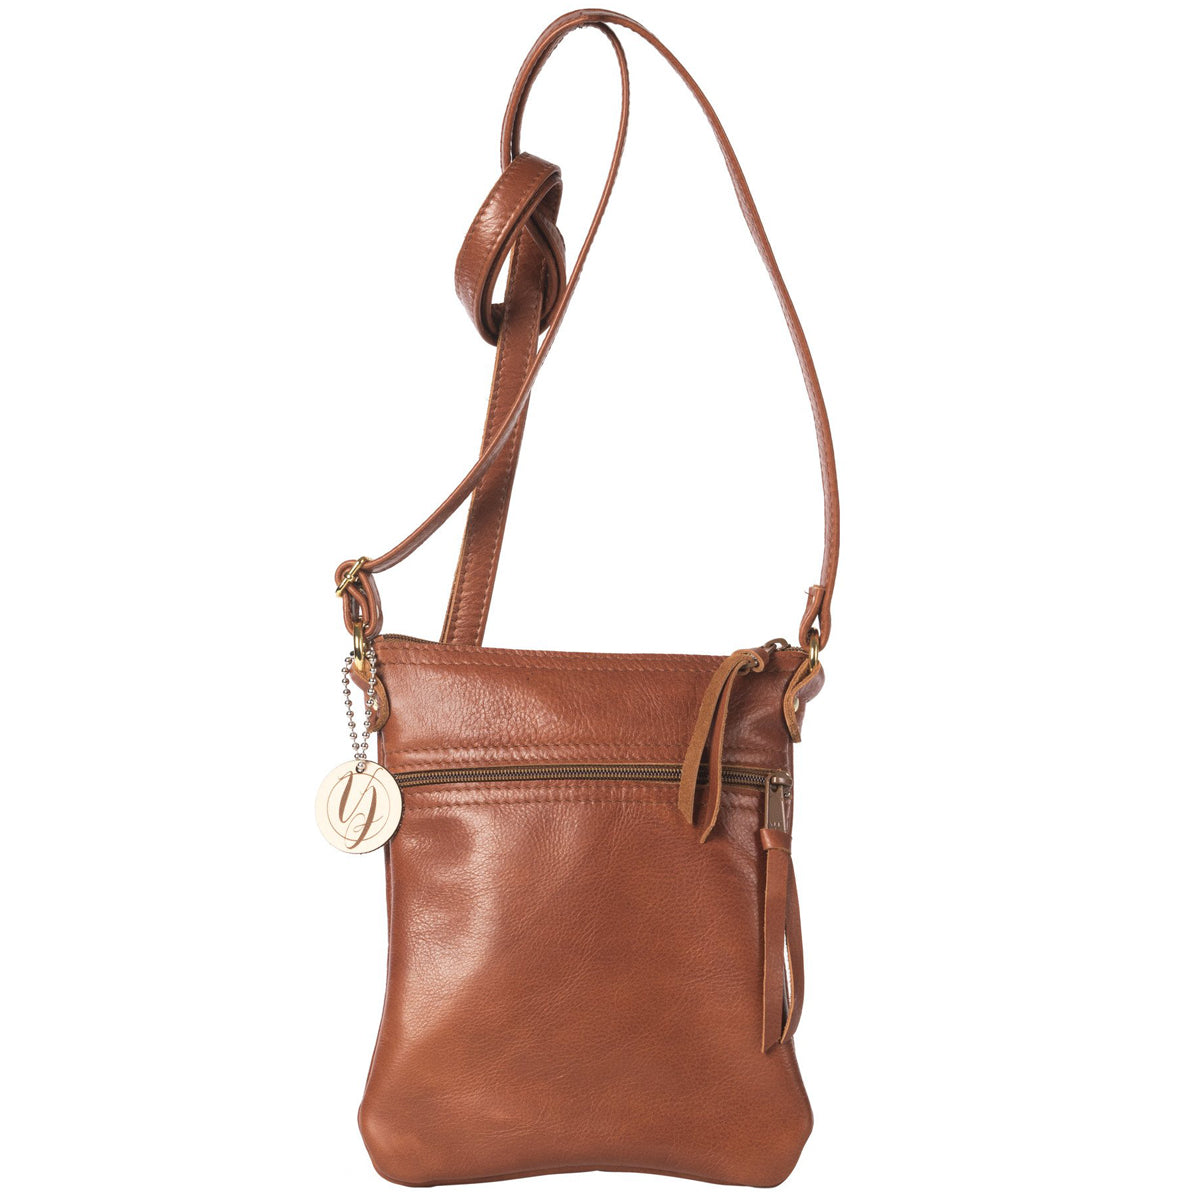 Handbags & Cross Body Bags • Hurdwick Handmade Bag Company